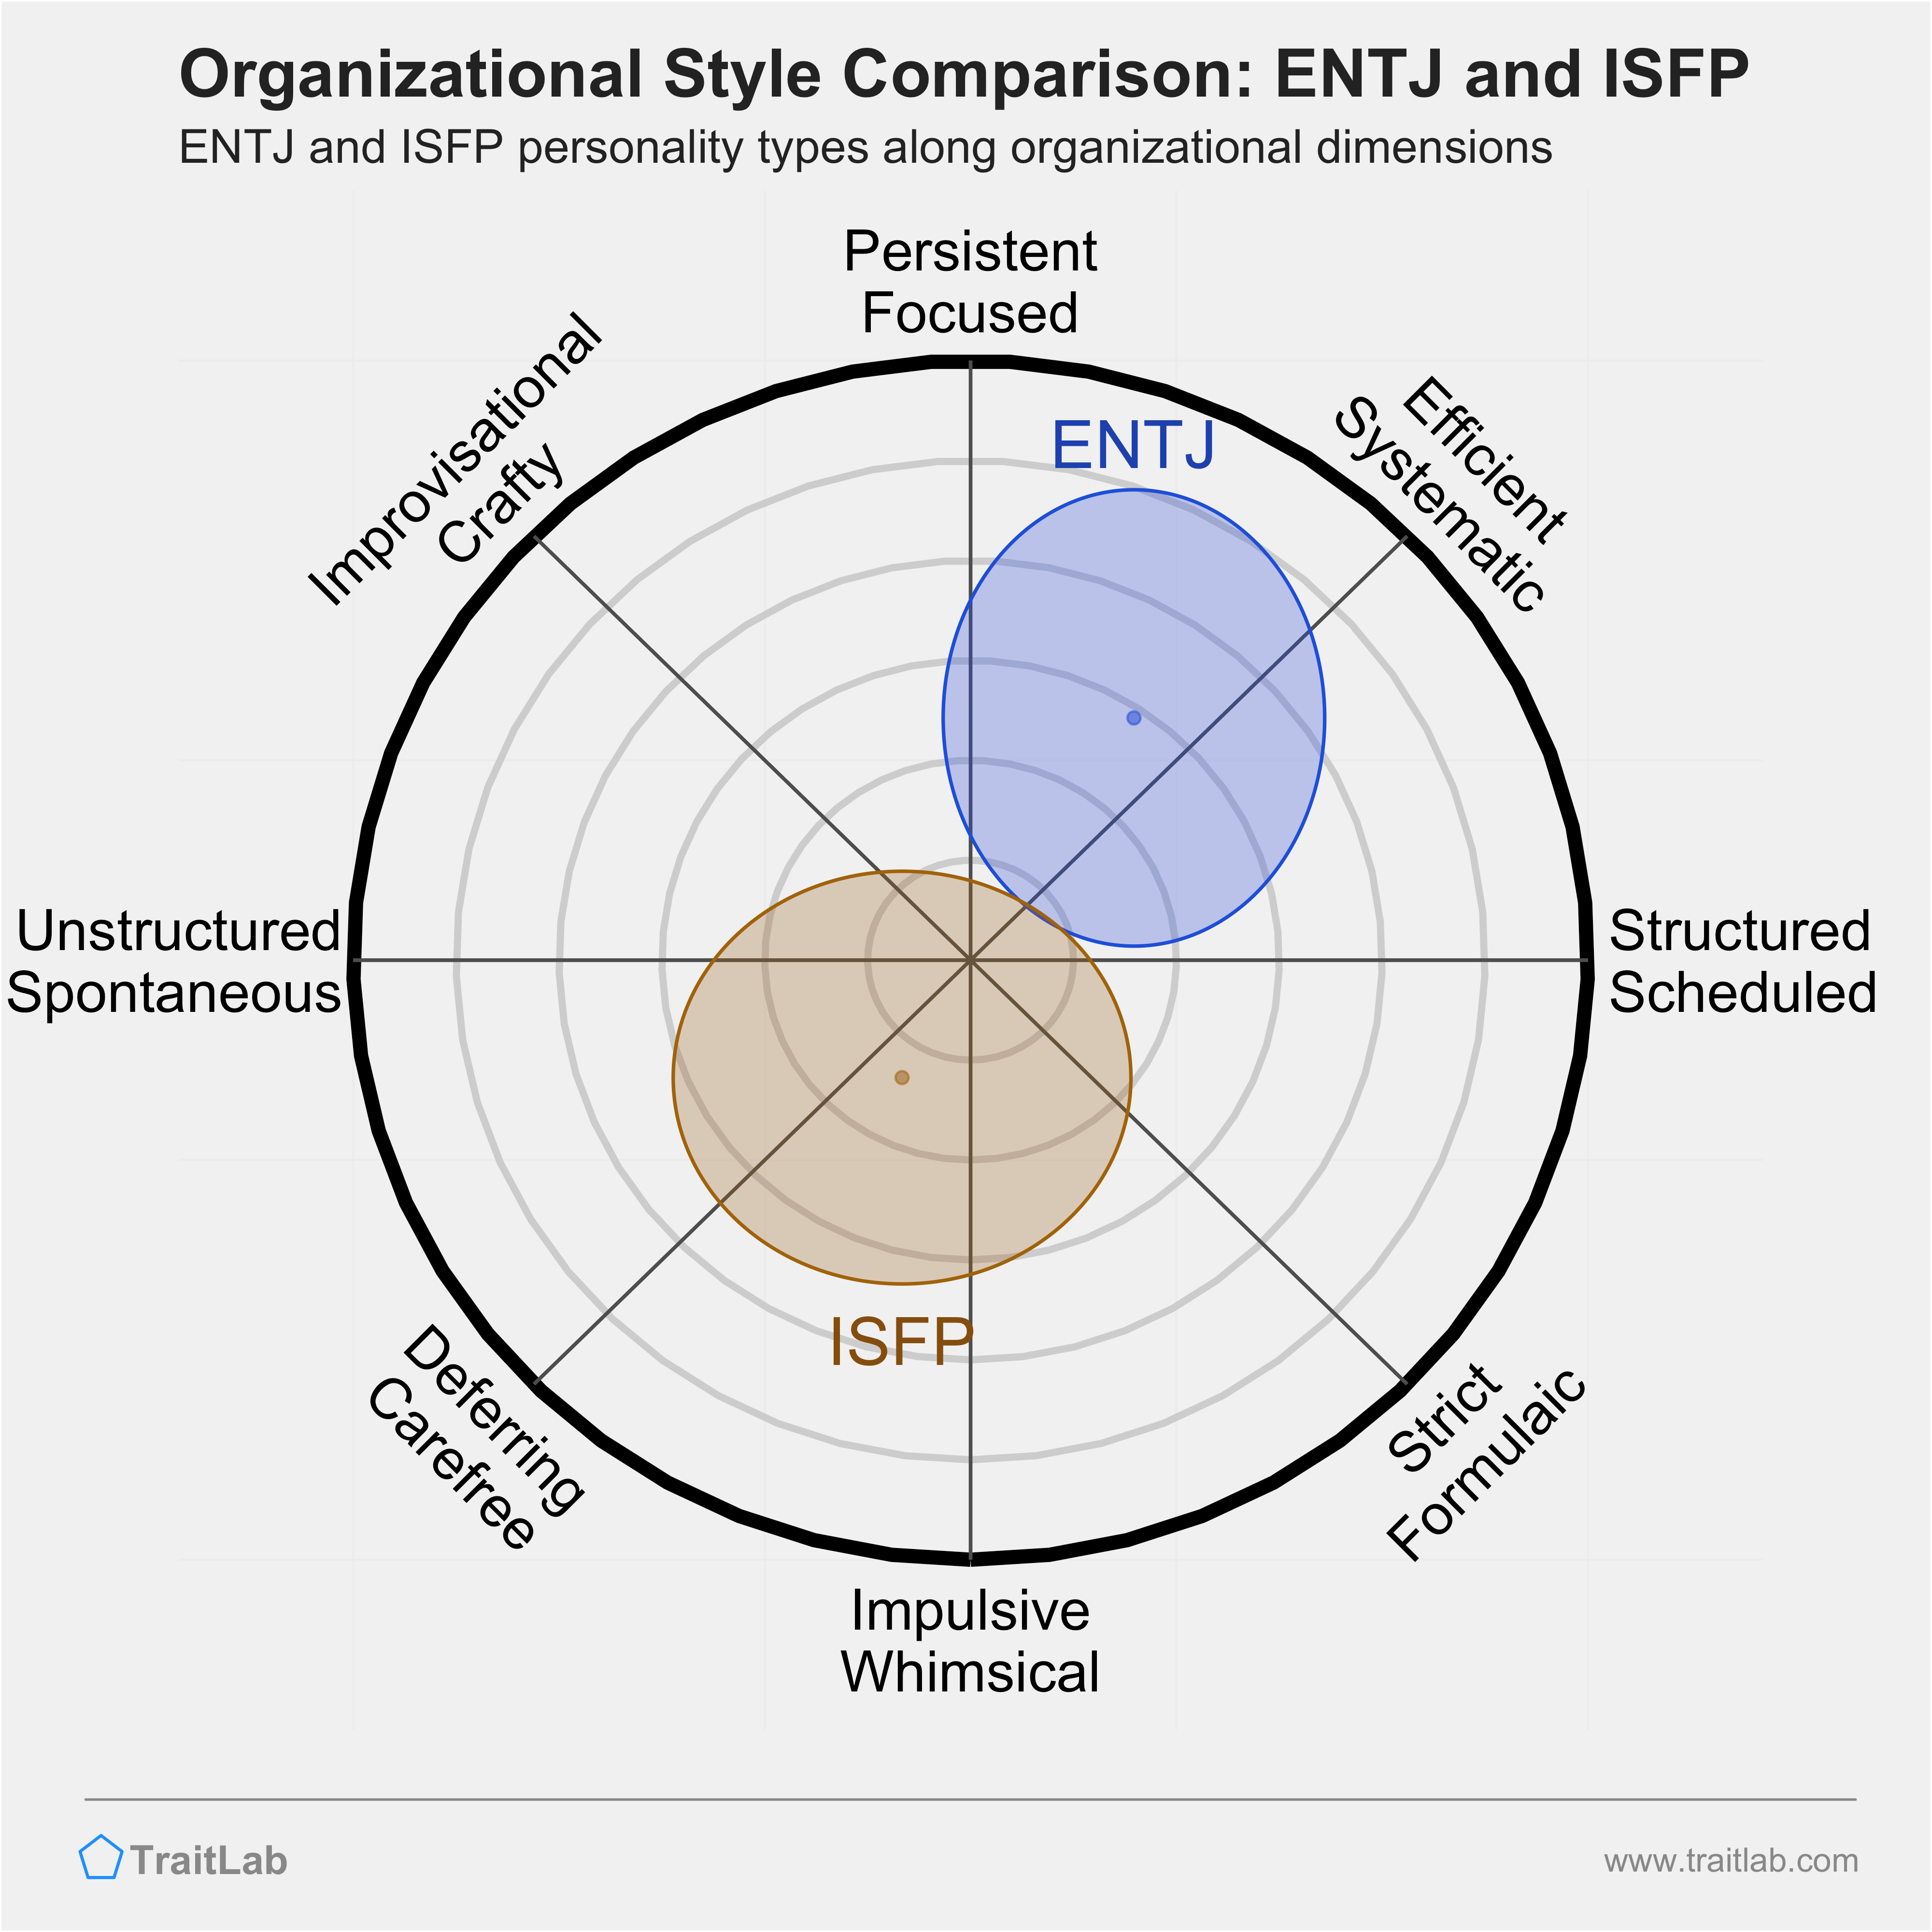 ENTJ and ISFP comparison across organizational dimensions